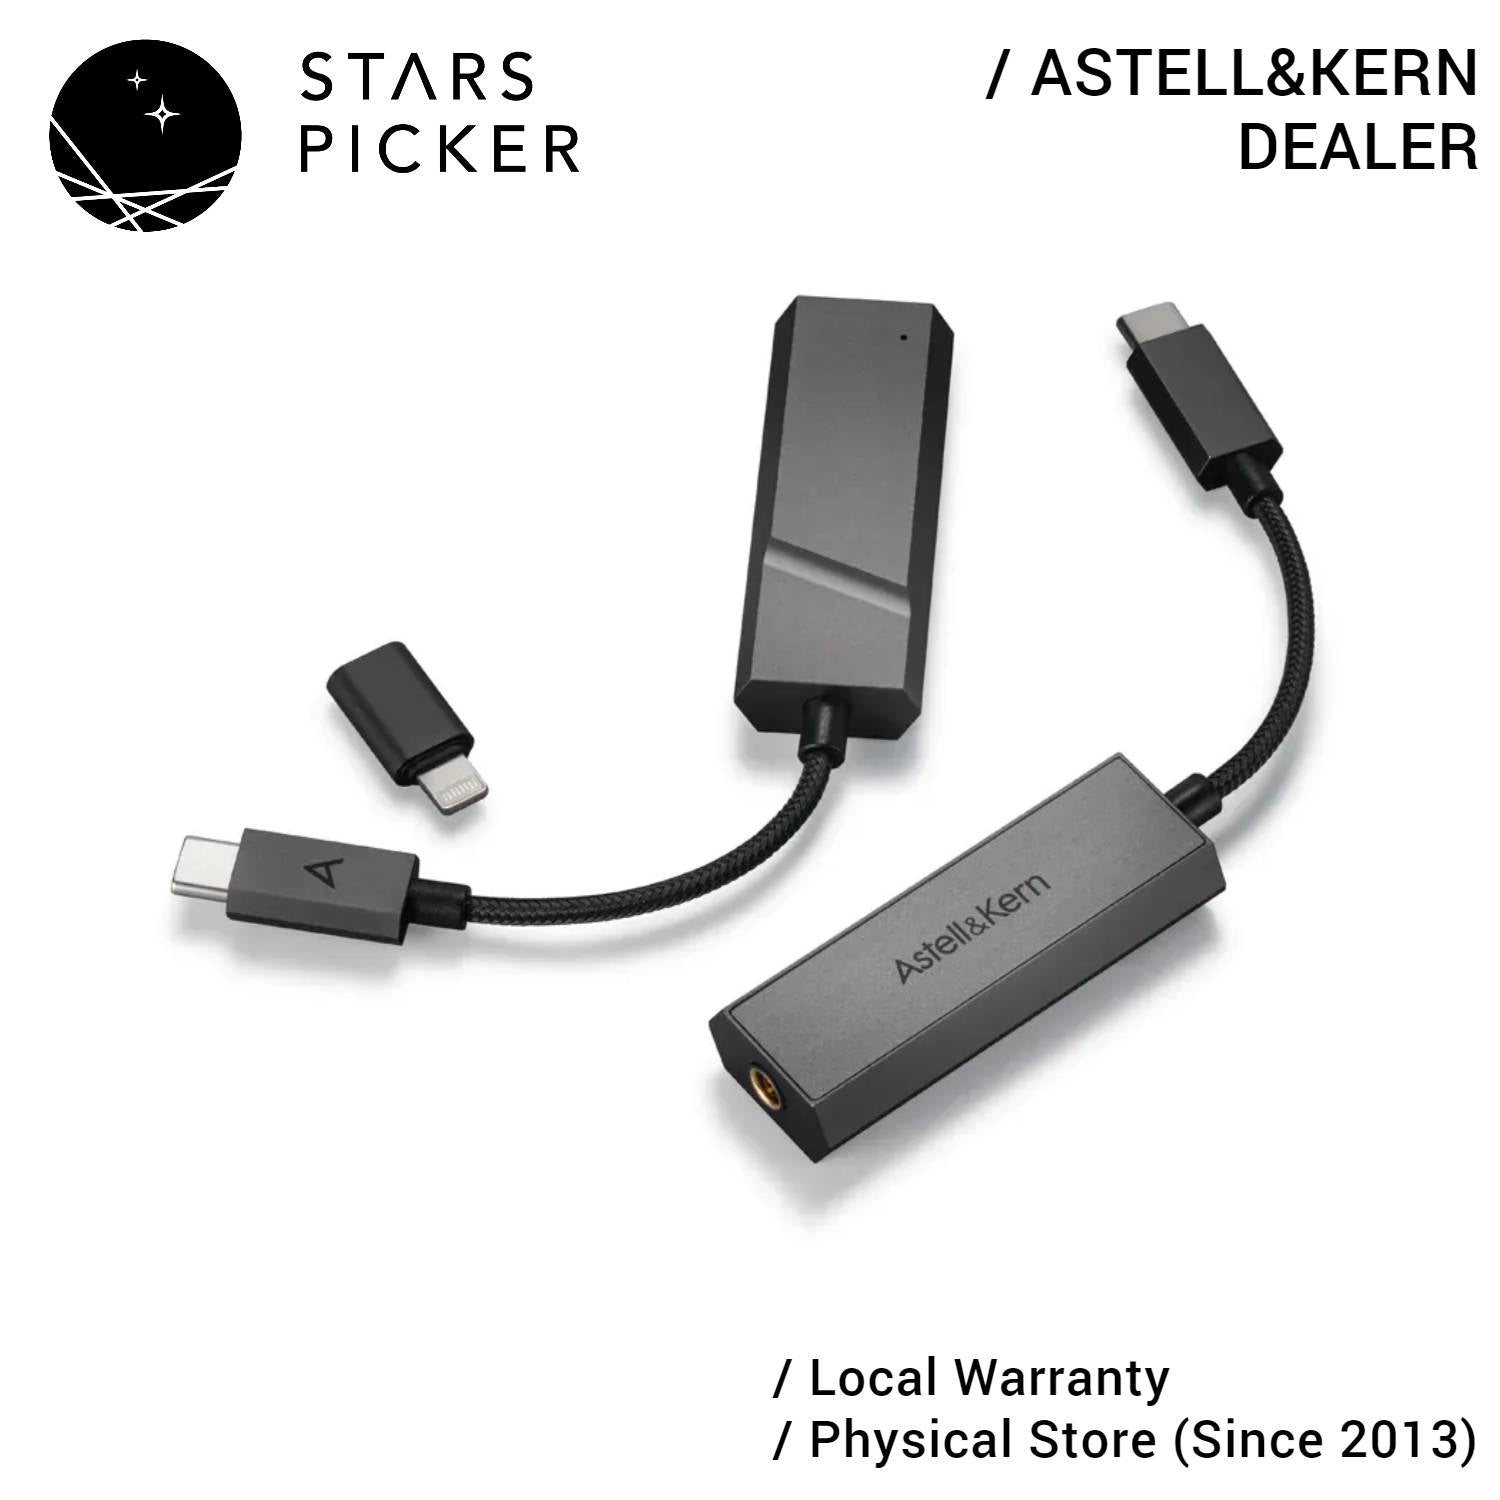 [CLEARANCE SALE] Astell&Kern AK HC2 (2022) Hi-Fi Cirrus Logic CS43198 Dual DAC Cable PCM 32bit 384kHz DSD Native